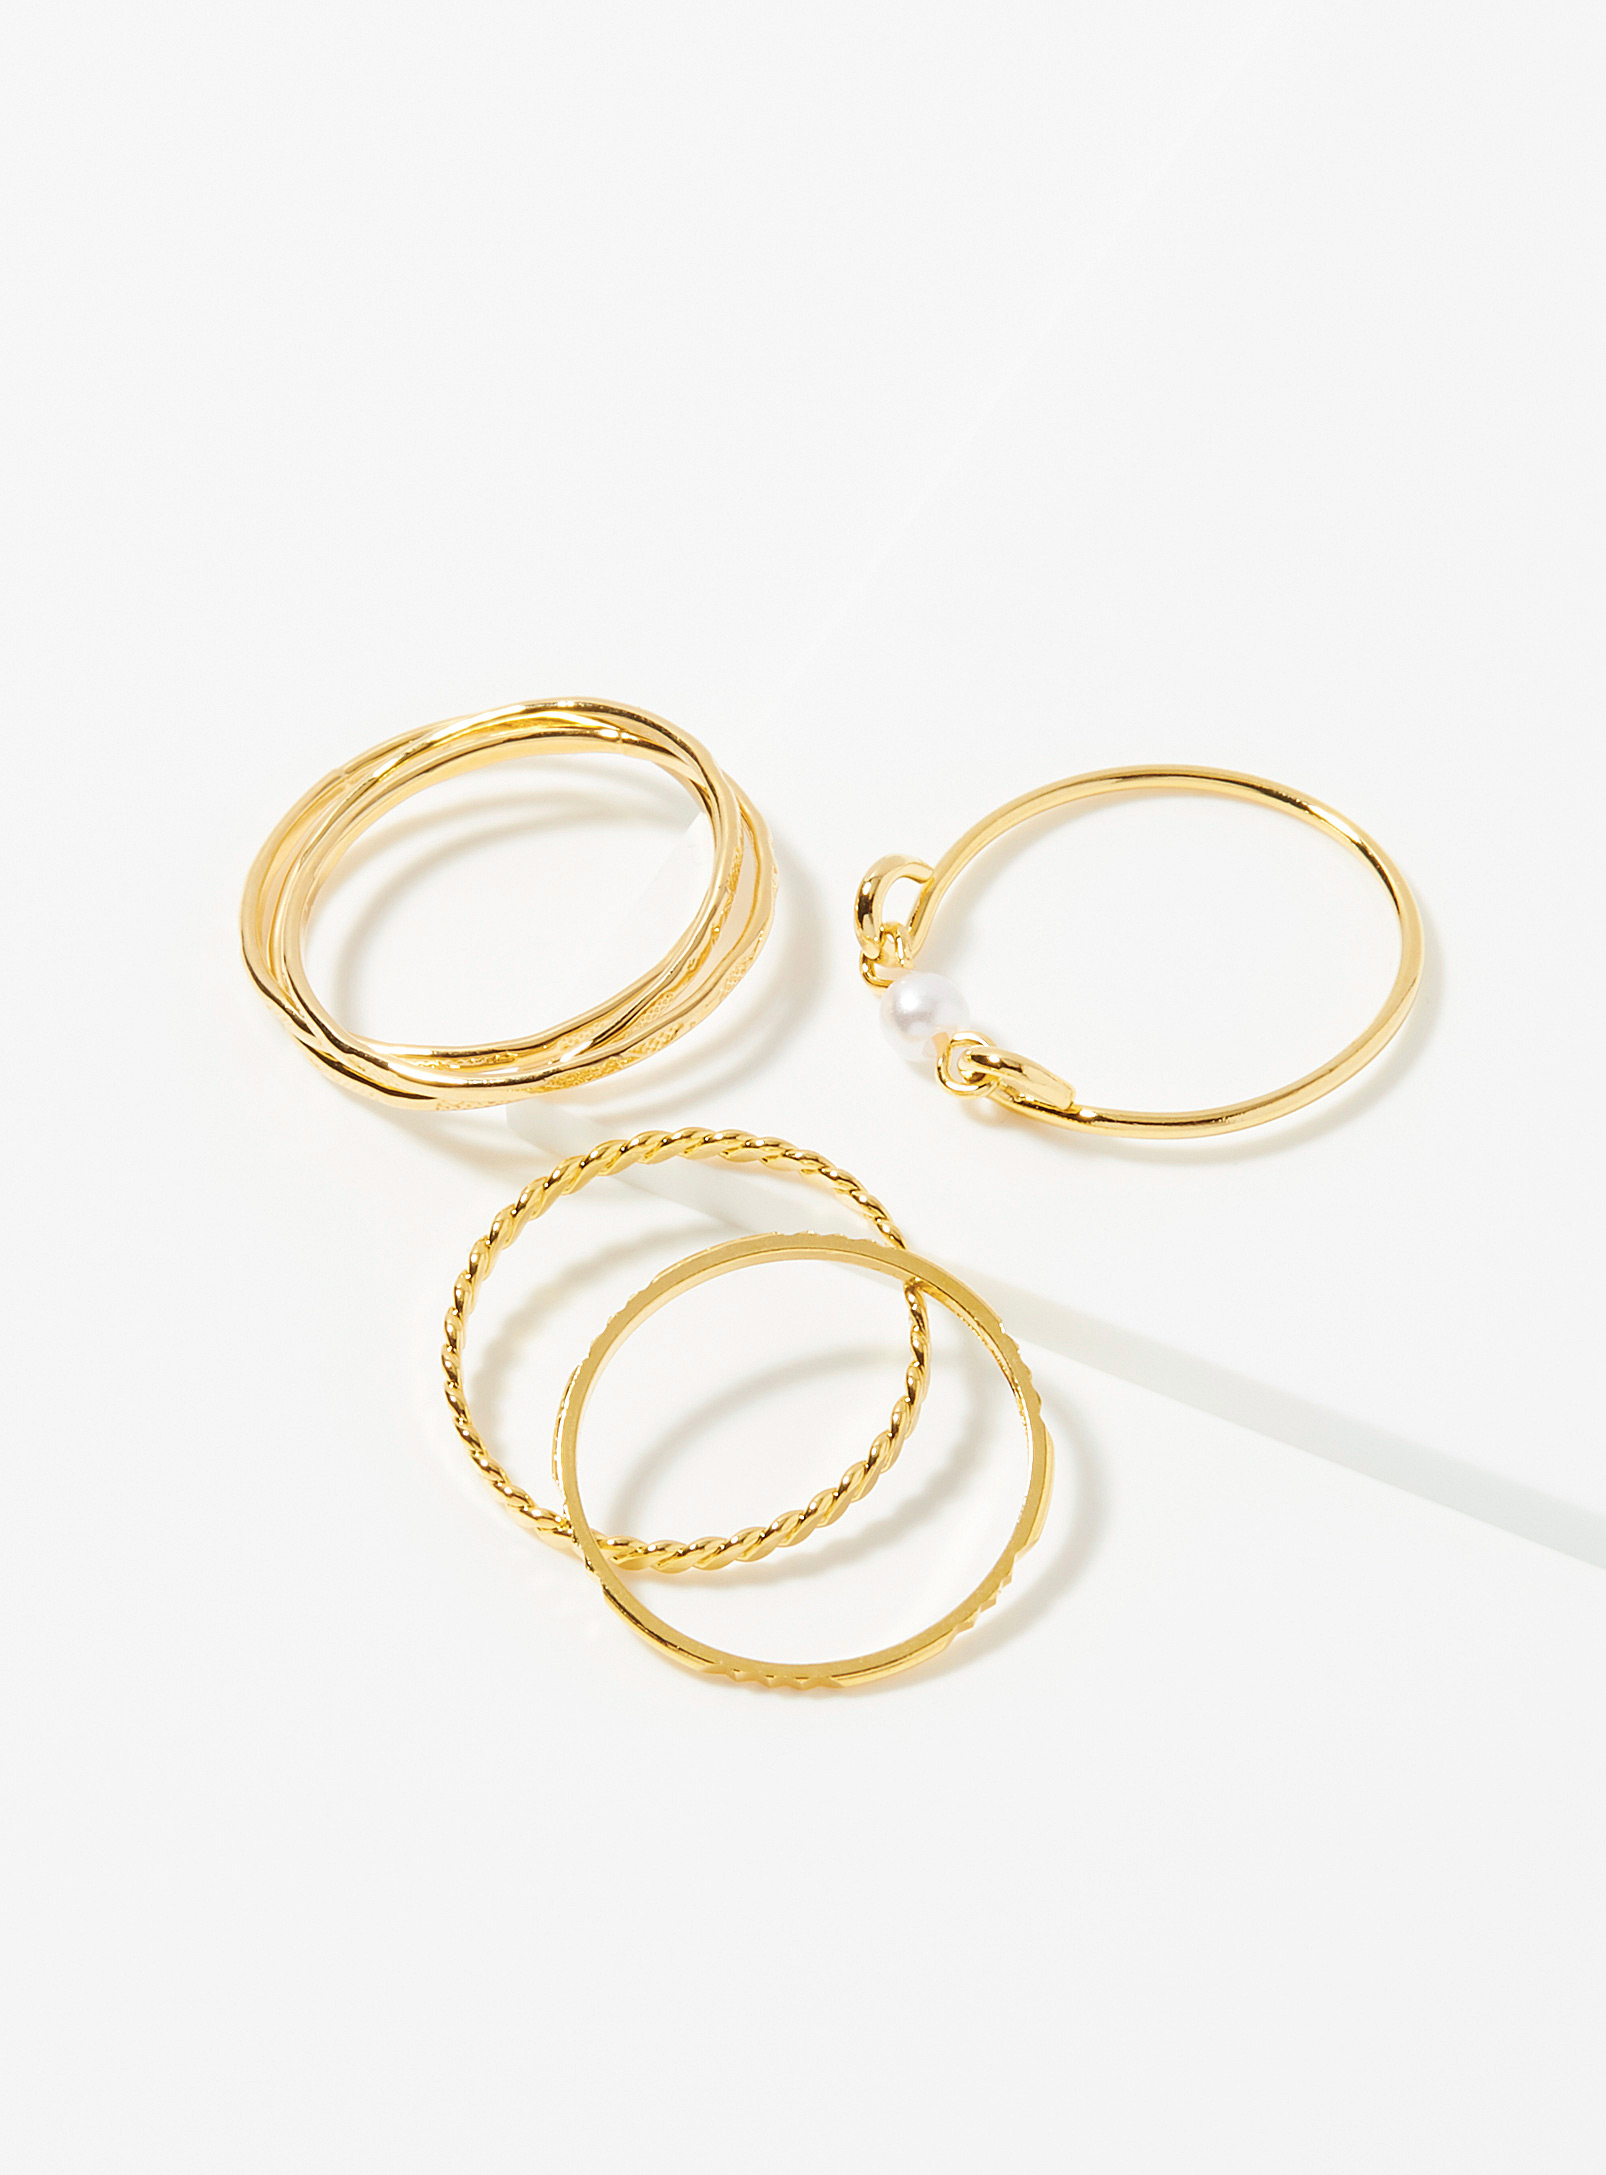 Simons - Women's Shiny minimalist rings Set of 6